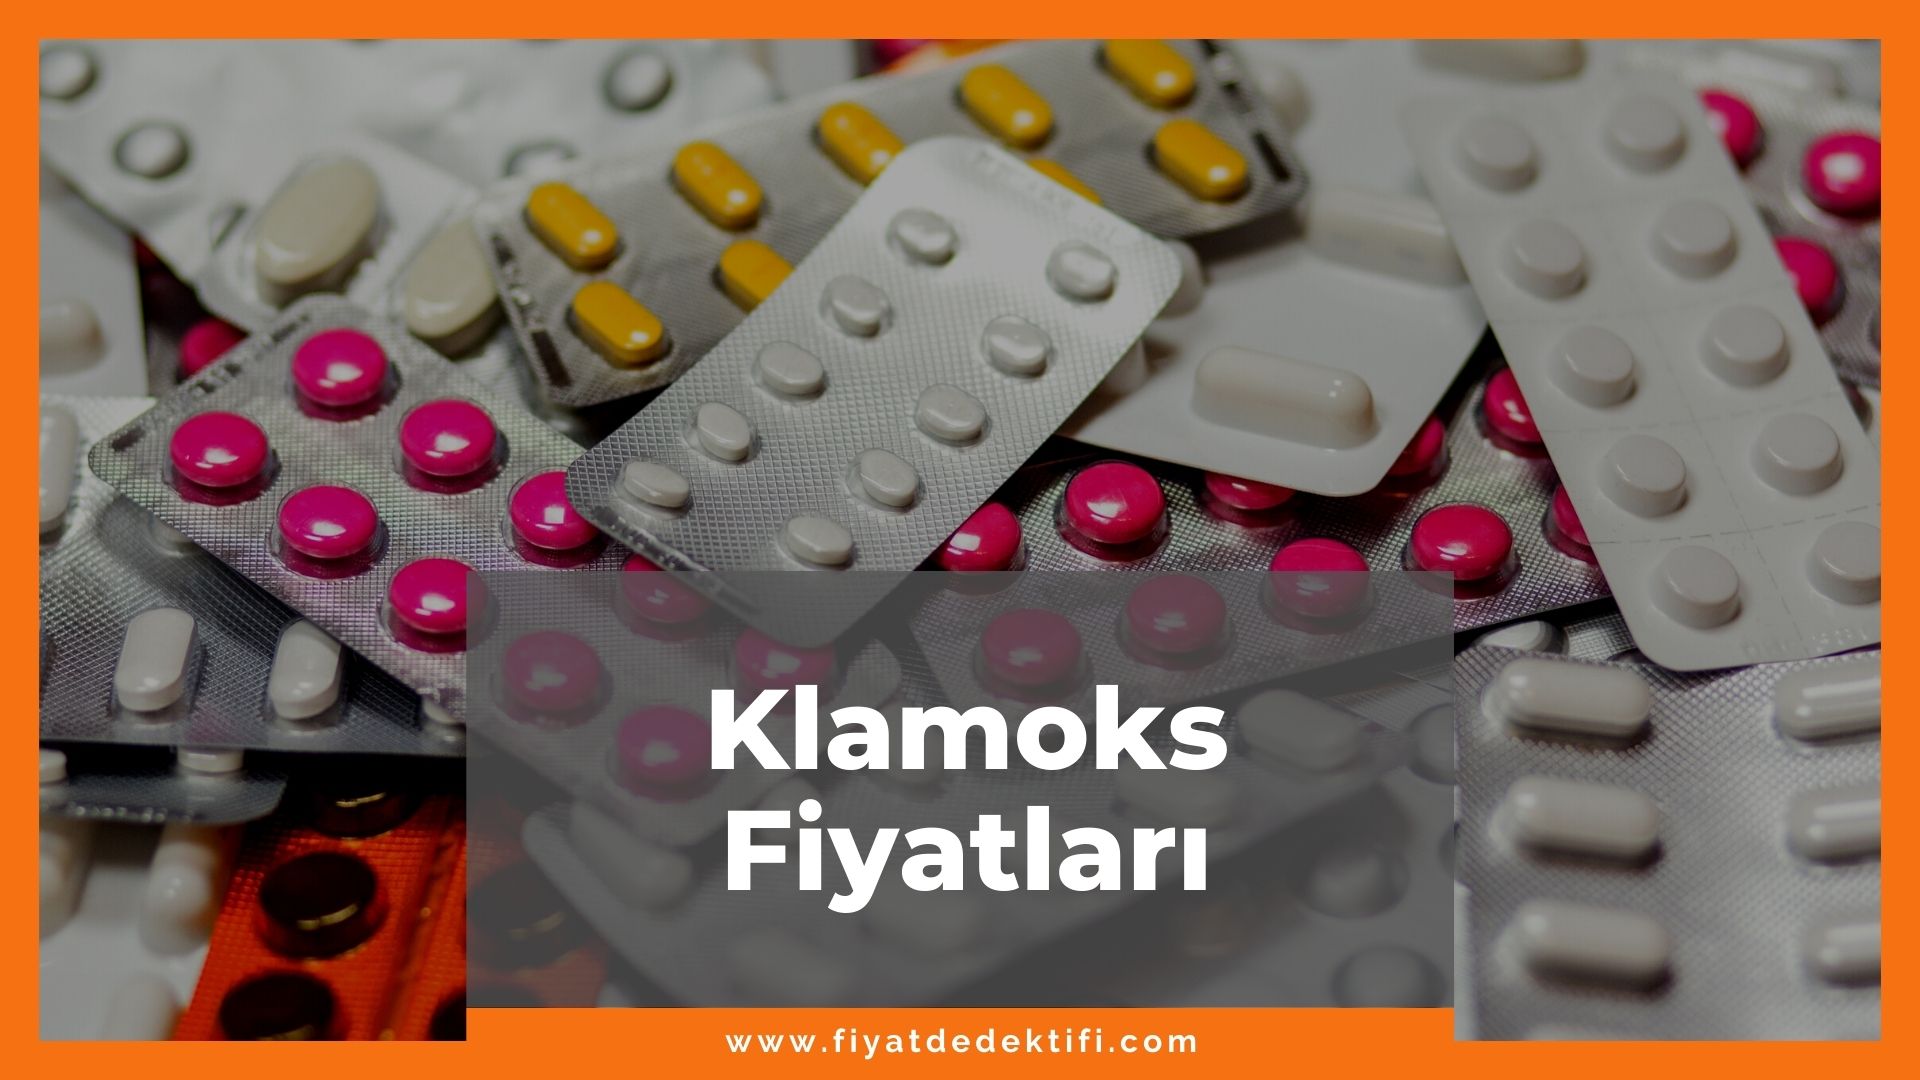 Klamoks Fiyat 2021, Klamoks Bid 1000 mg Antibiyotik Fiyatı, klamoks zamlandı mı, klamoks zamlı fiyatı ne kadar kaç tl oldu